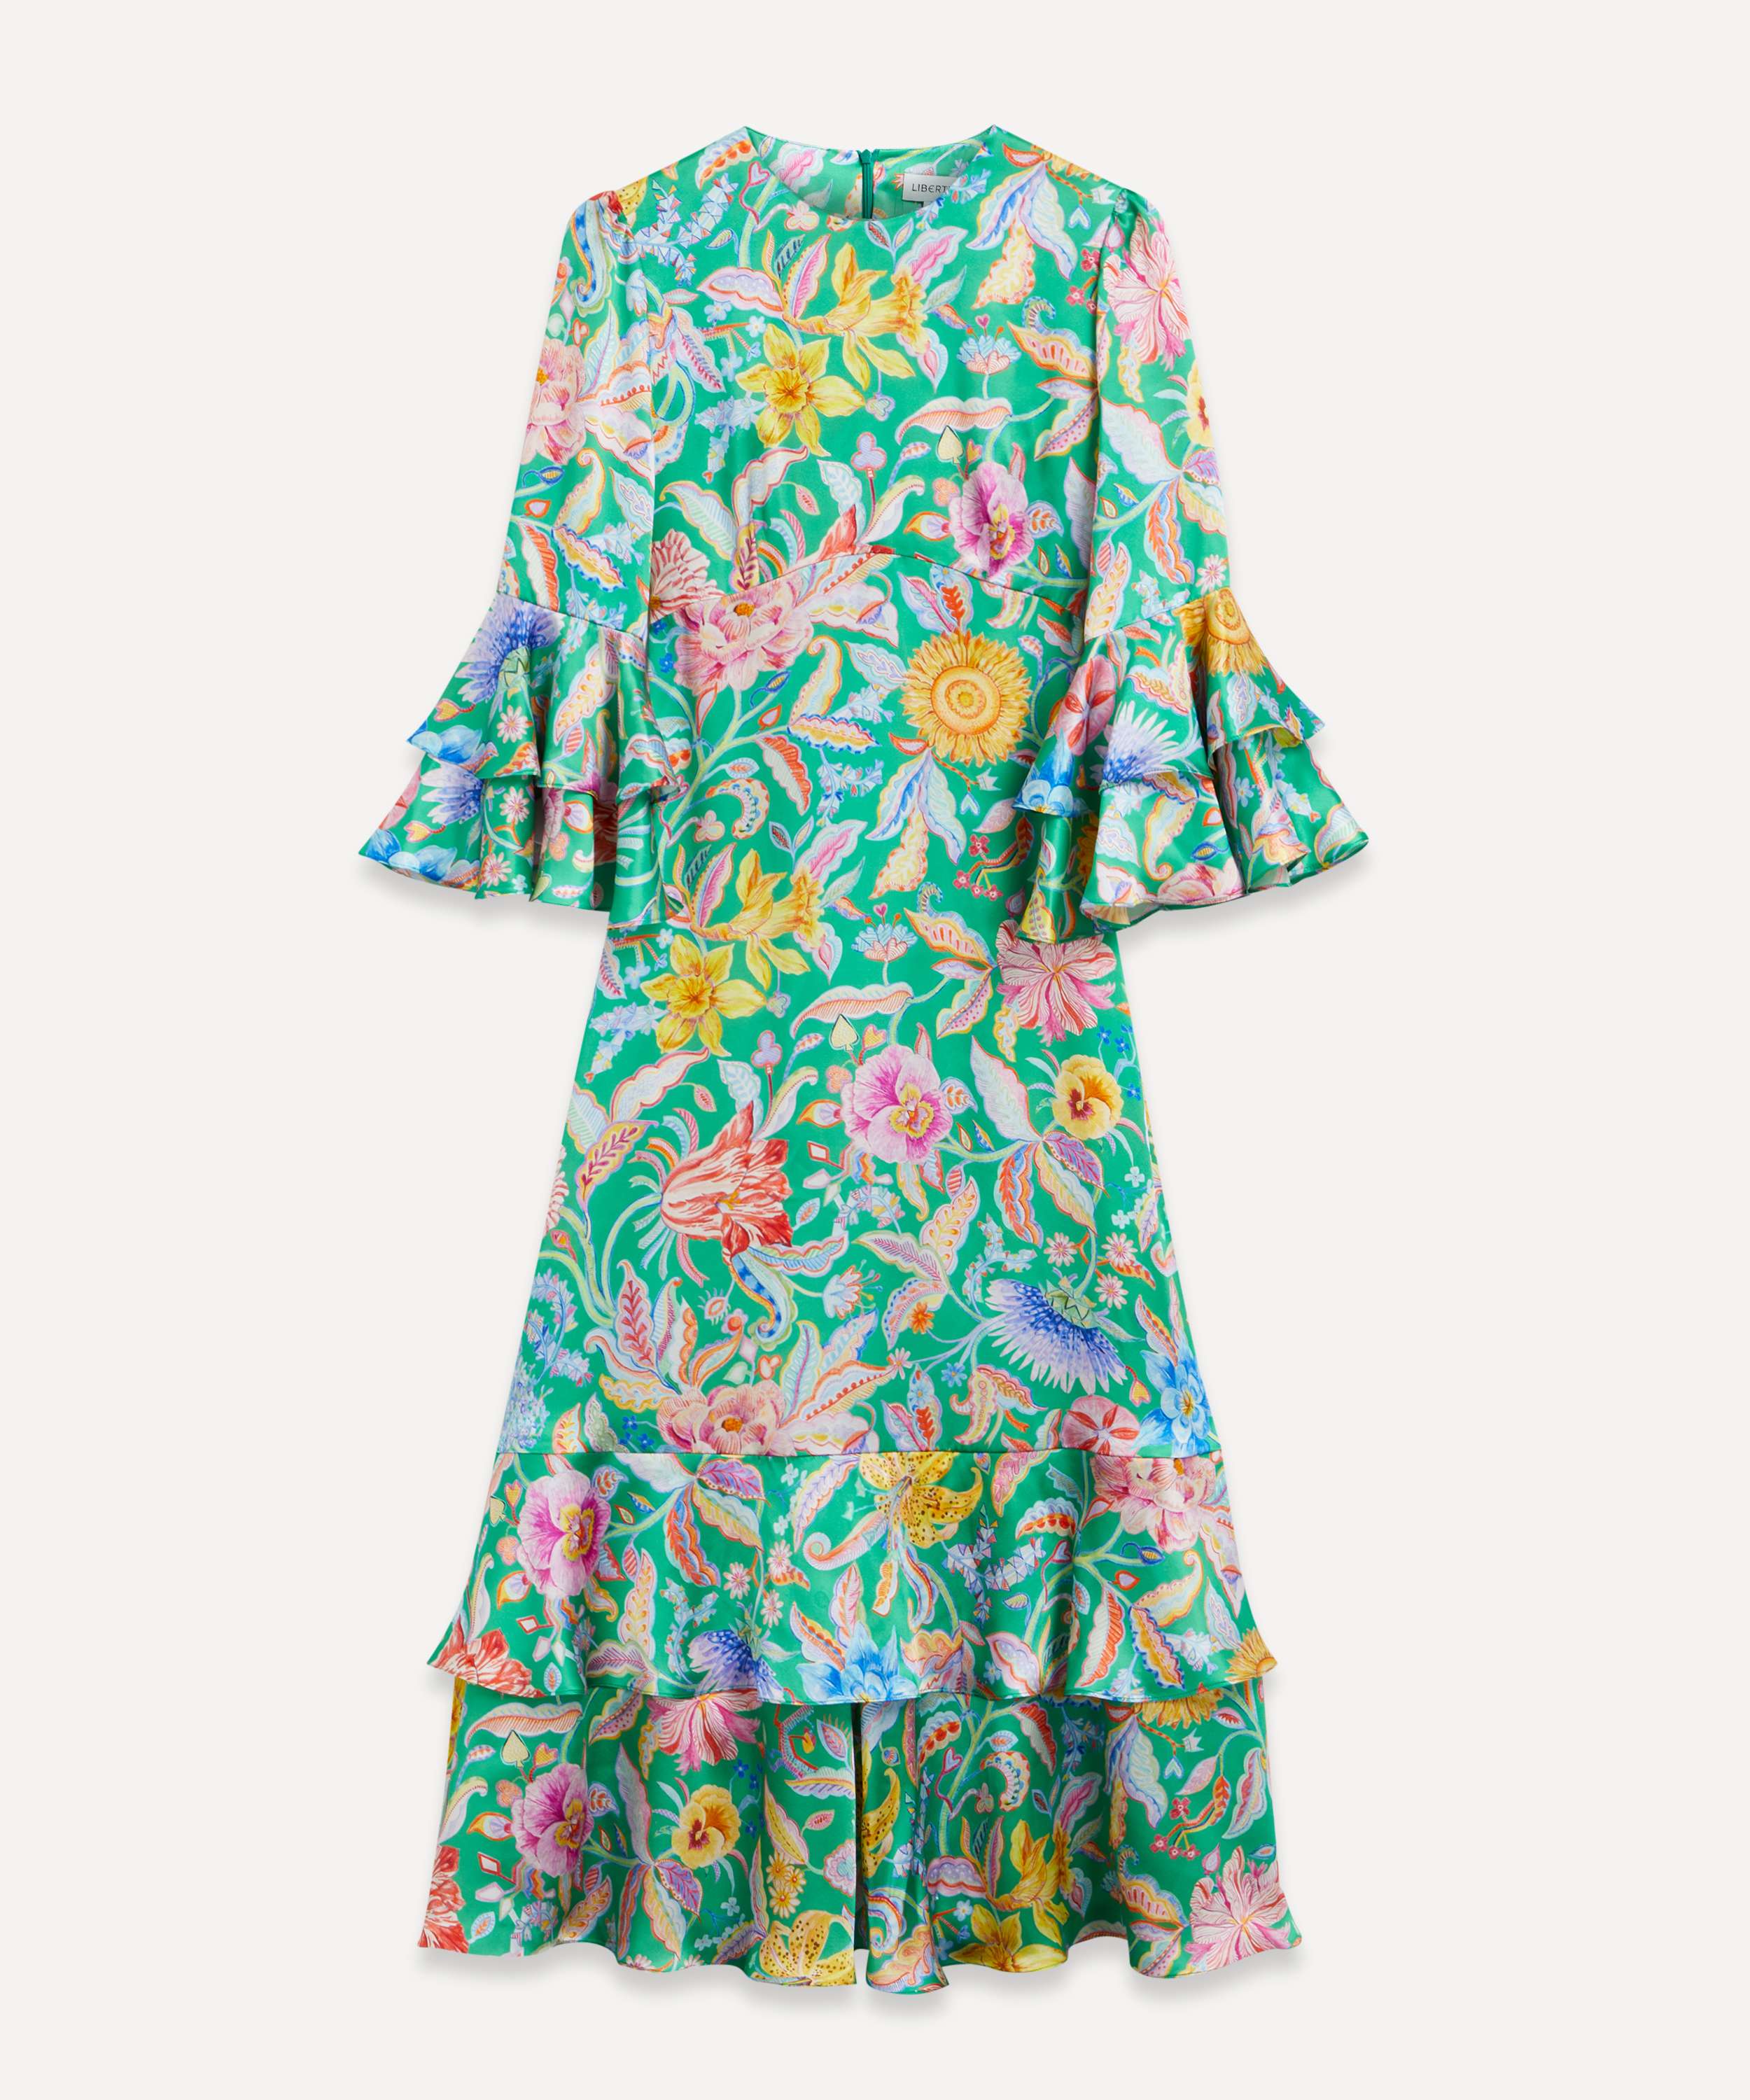 Liberty's Edit of the Best Summer Dresses